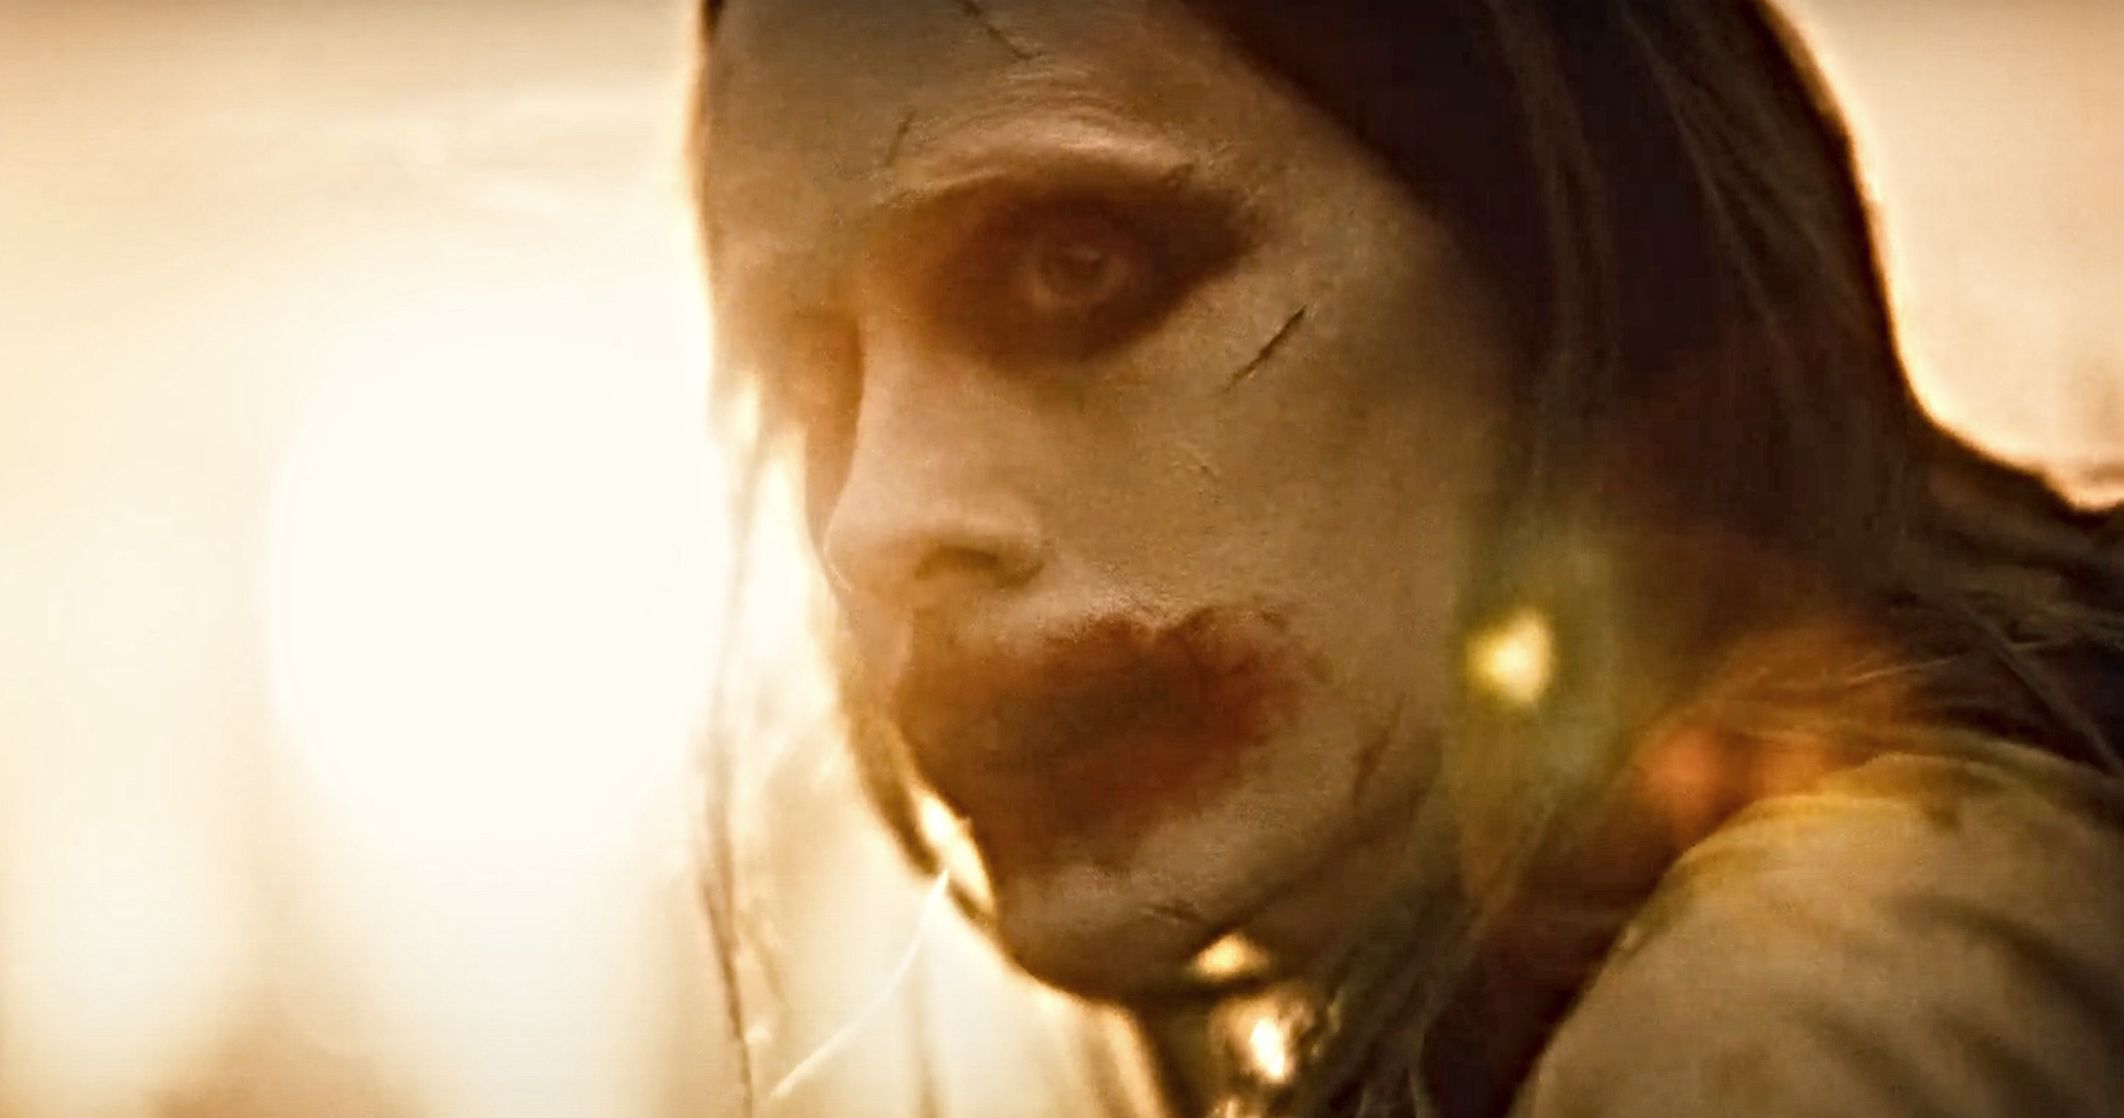 Full Zack Snyder's Justice League Trailer Arrives, Bringing Joker to the Team